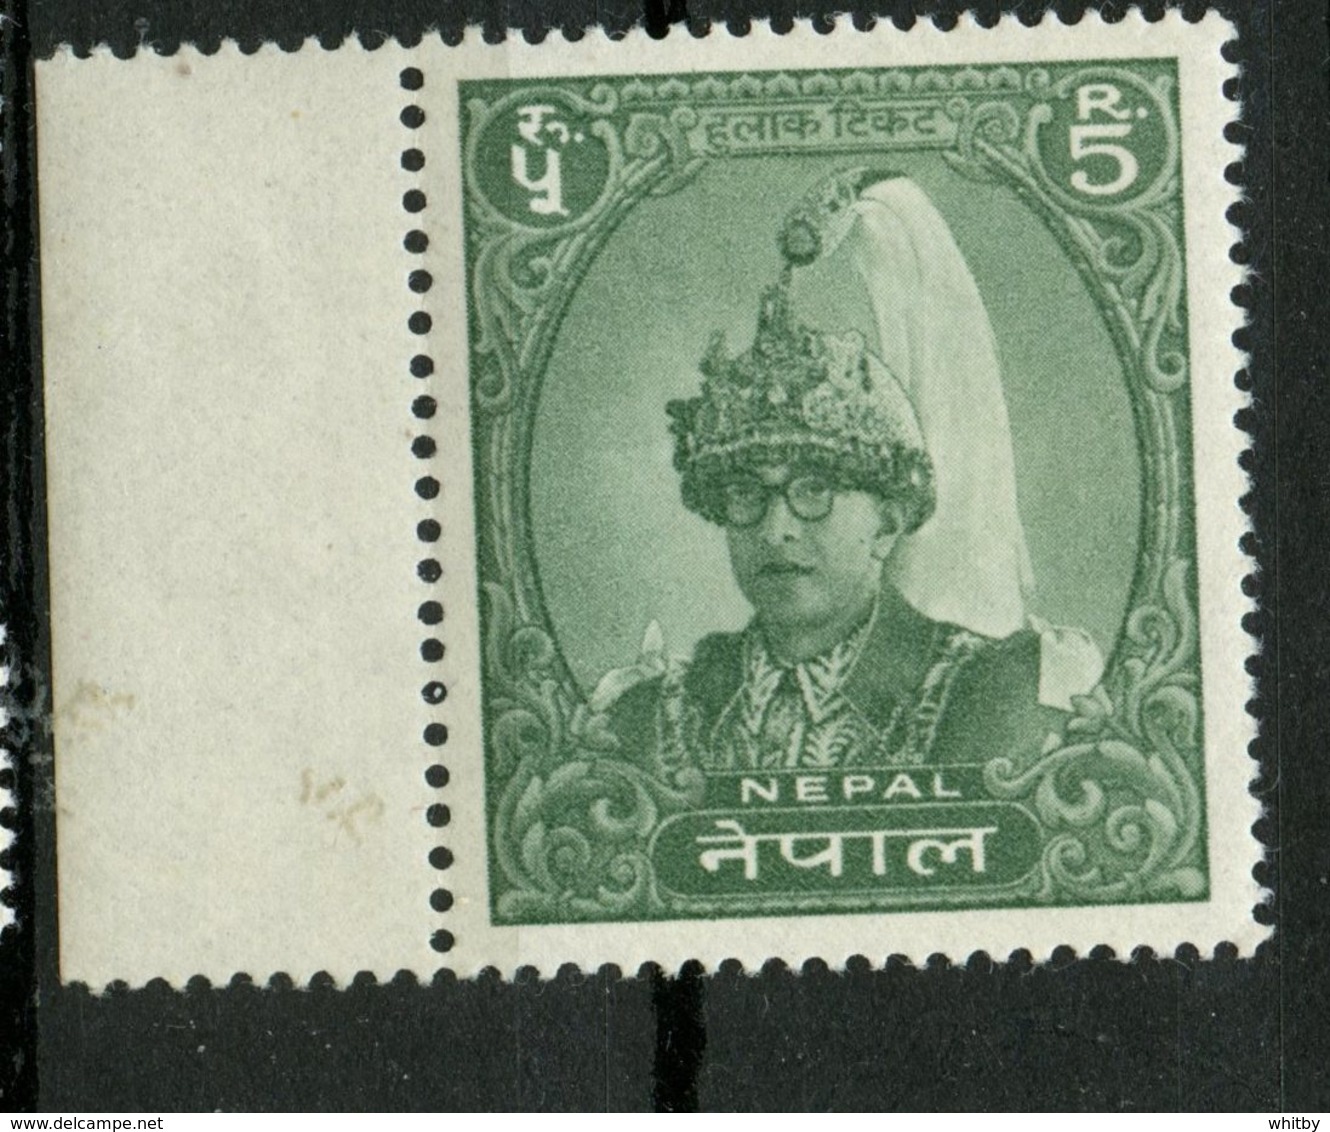 Nepal 1962 5r King Mahendra Issue #151 MH - Nepal